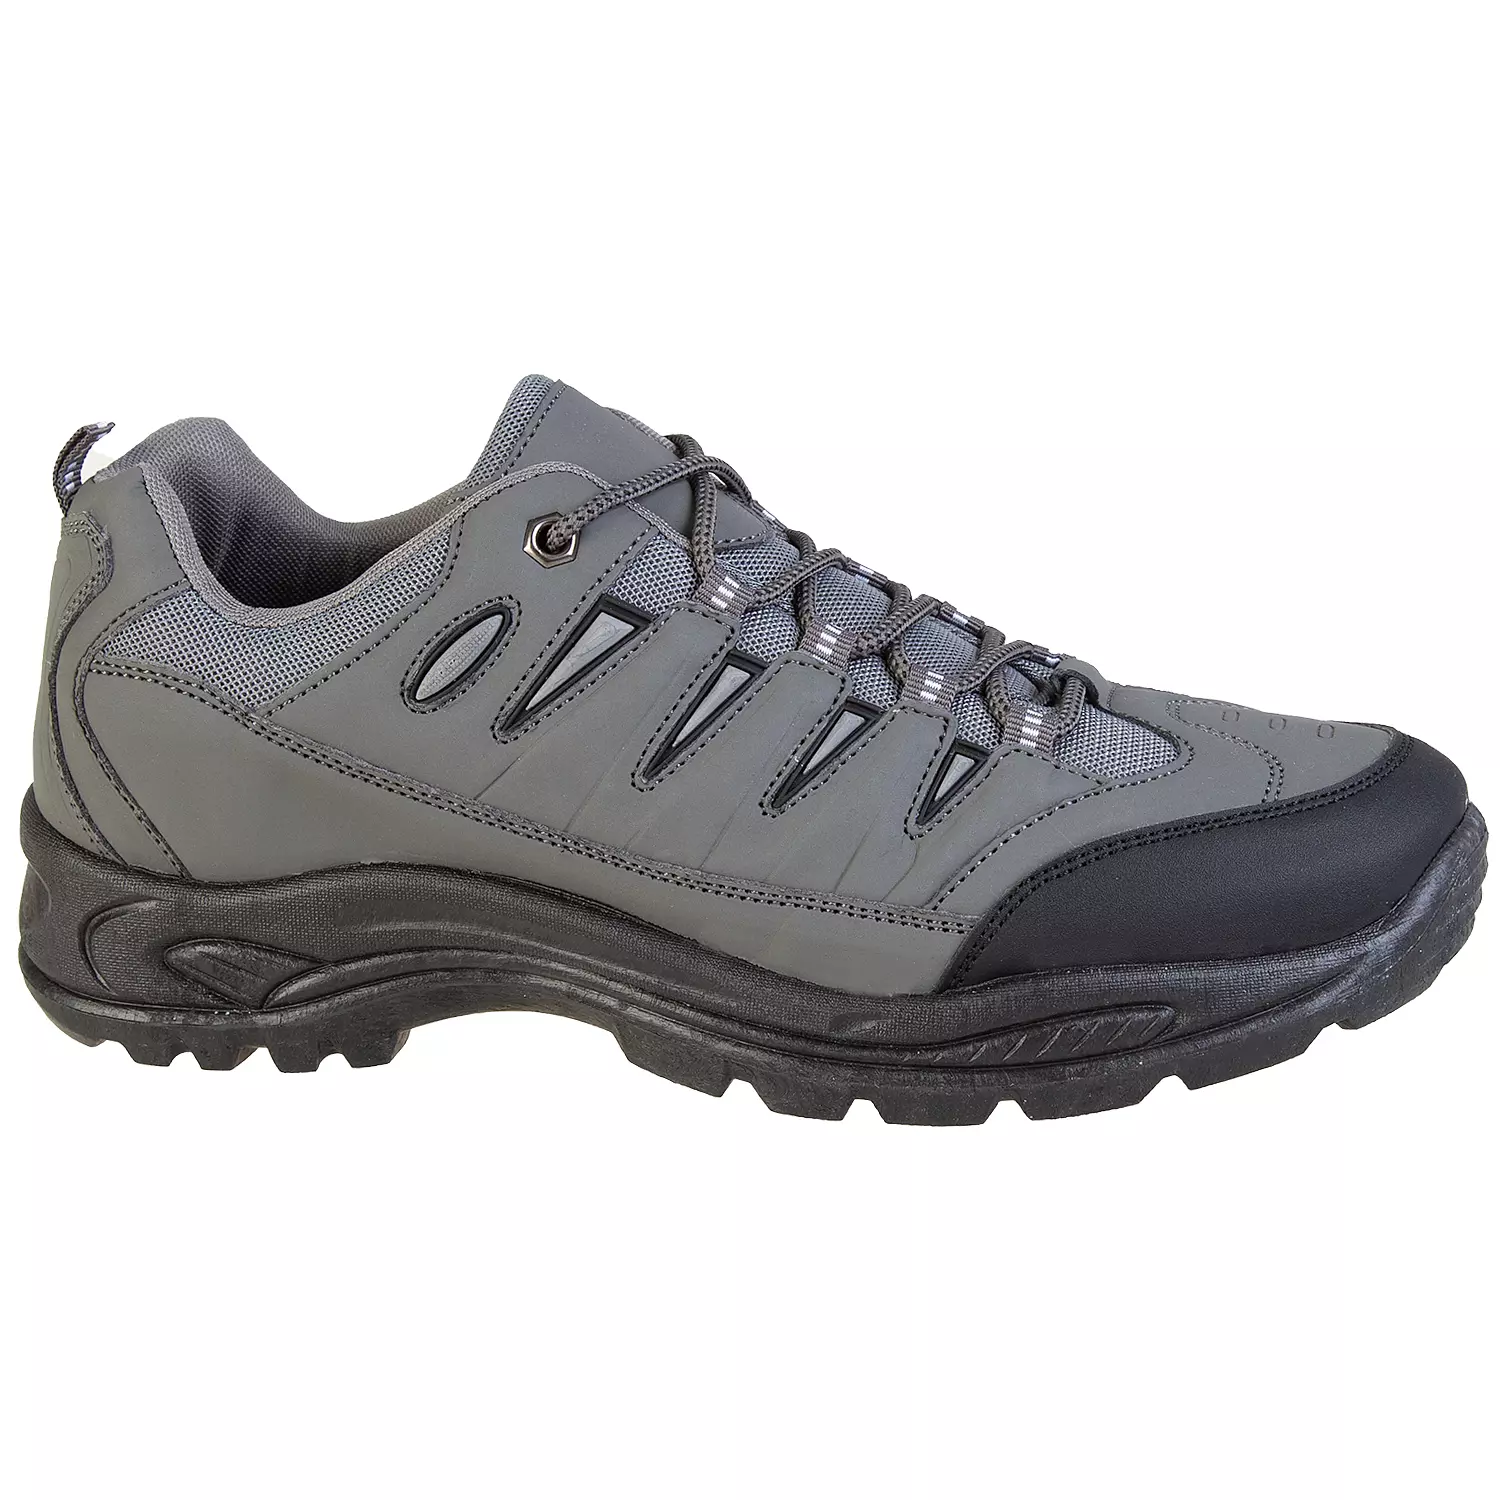 Men's low top waterproof trekking and hiking shoes, size 11